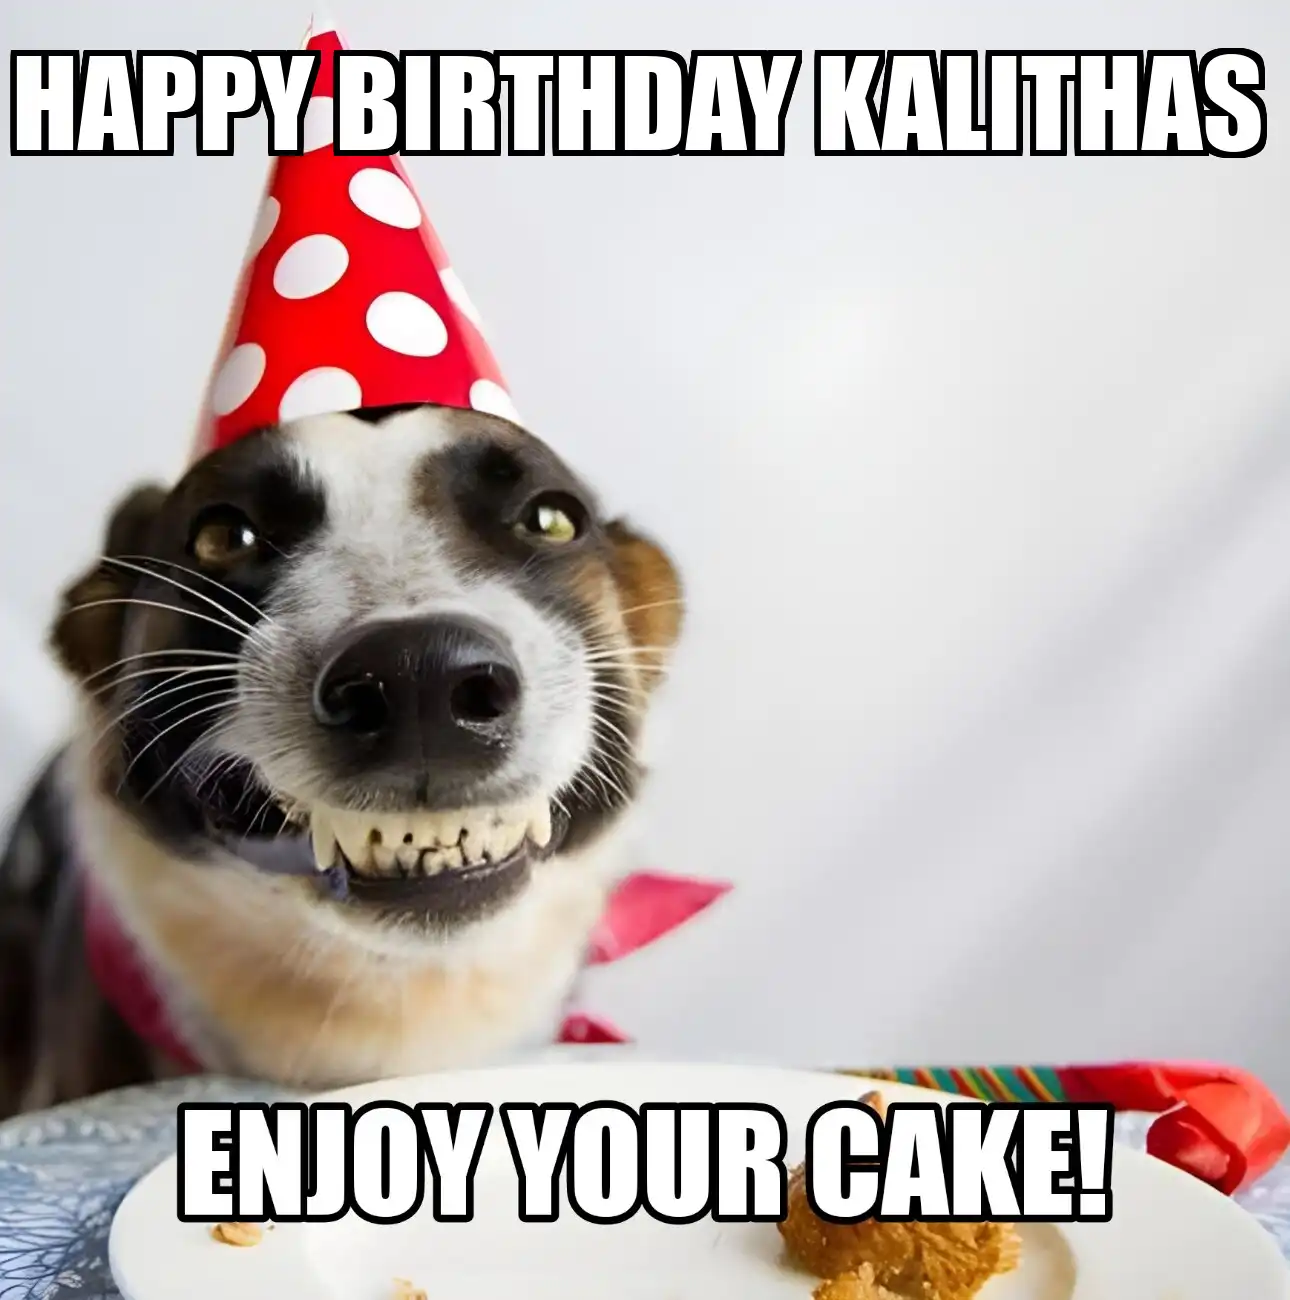 Happy Birthday Kalithas Enjoy Your Cake Dog Meme